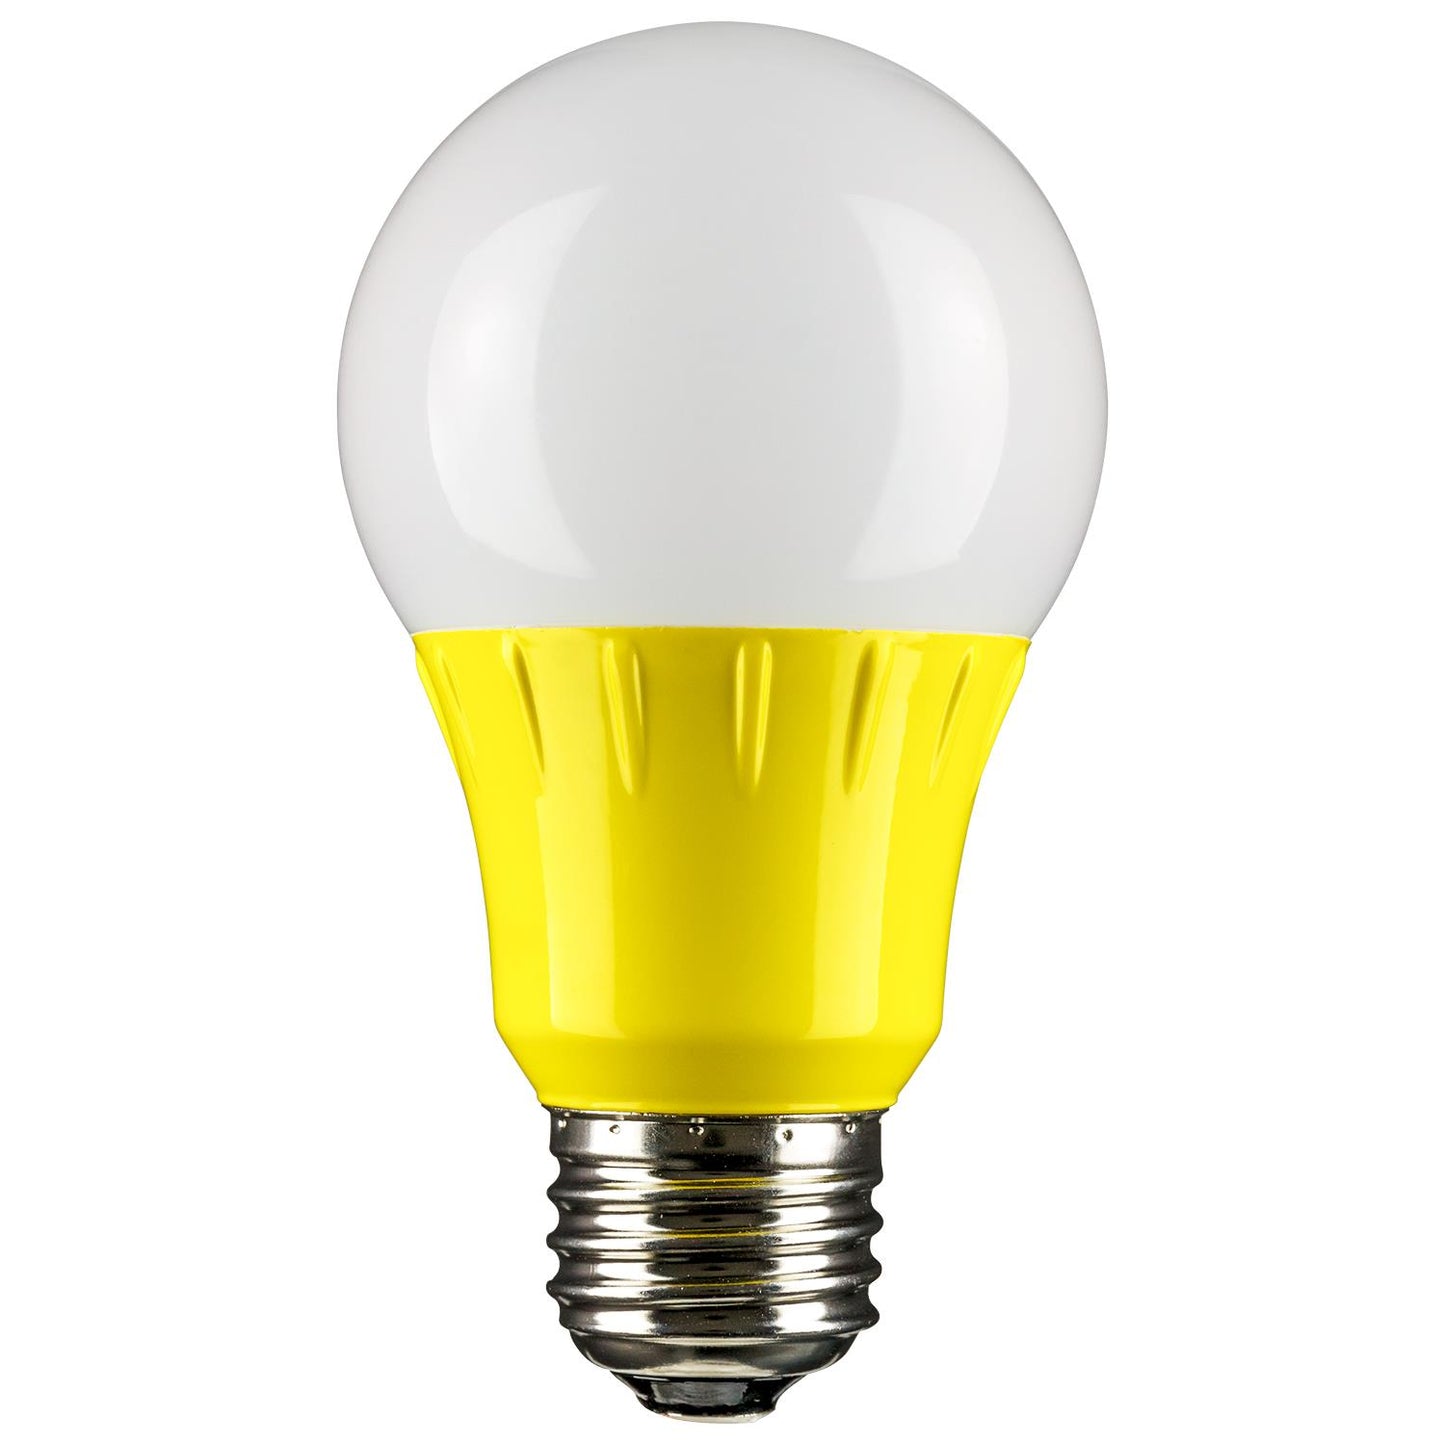 Sunlite LED A Type Colored 3W Light Bulb Medium (E26) Base, Yellow